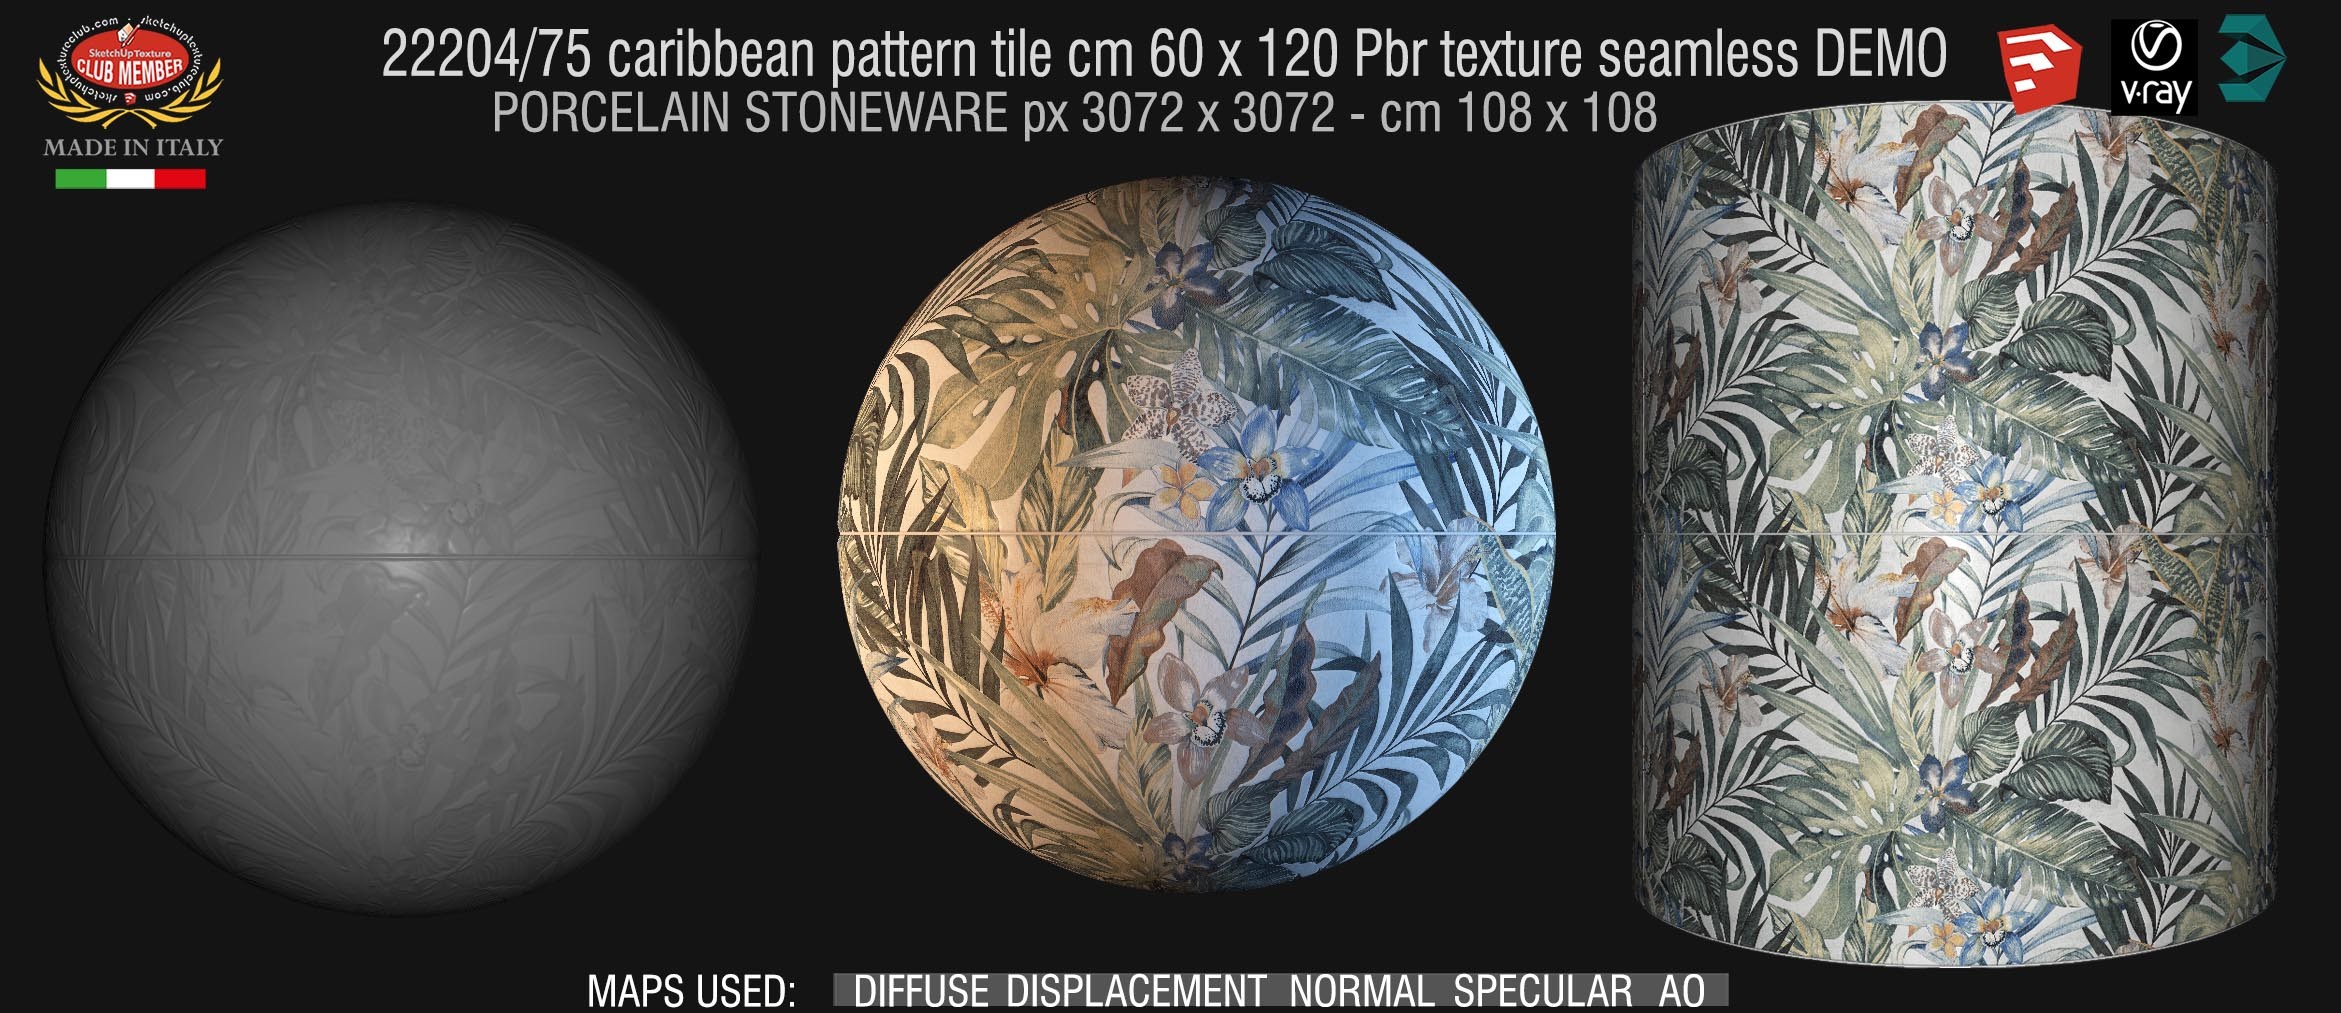 22204/75 PORCELAIN STONEWARE caribbean pattern tile cm 60 x 120 Pbr texture seamless DEMO -